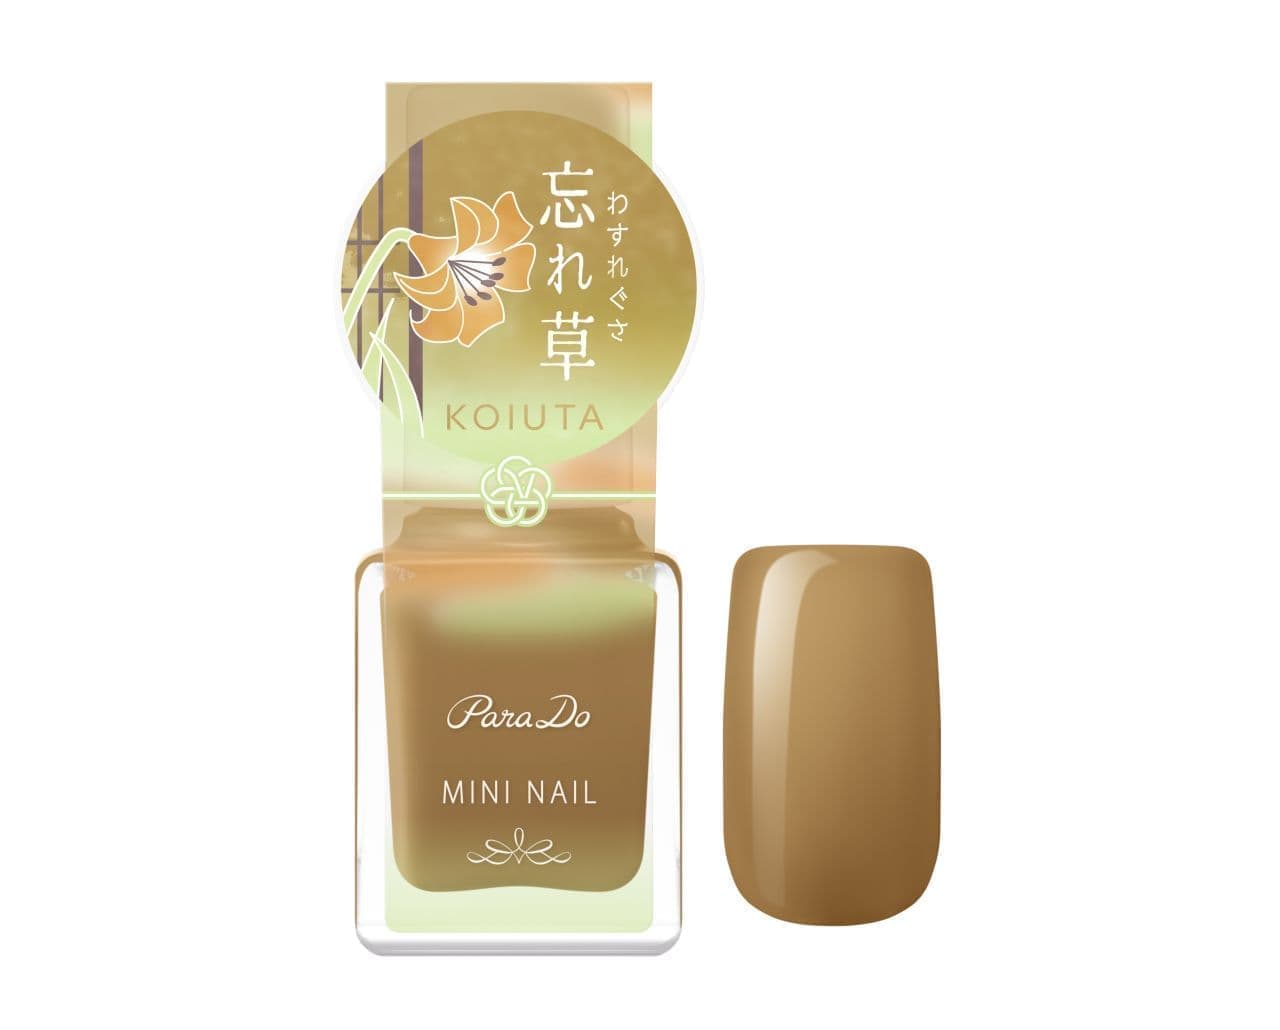 Paradoo Mini Nail Polish" Limited Colors for Autumn/Winter